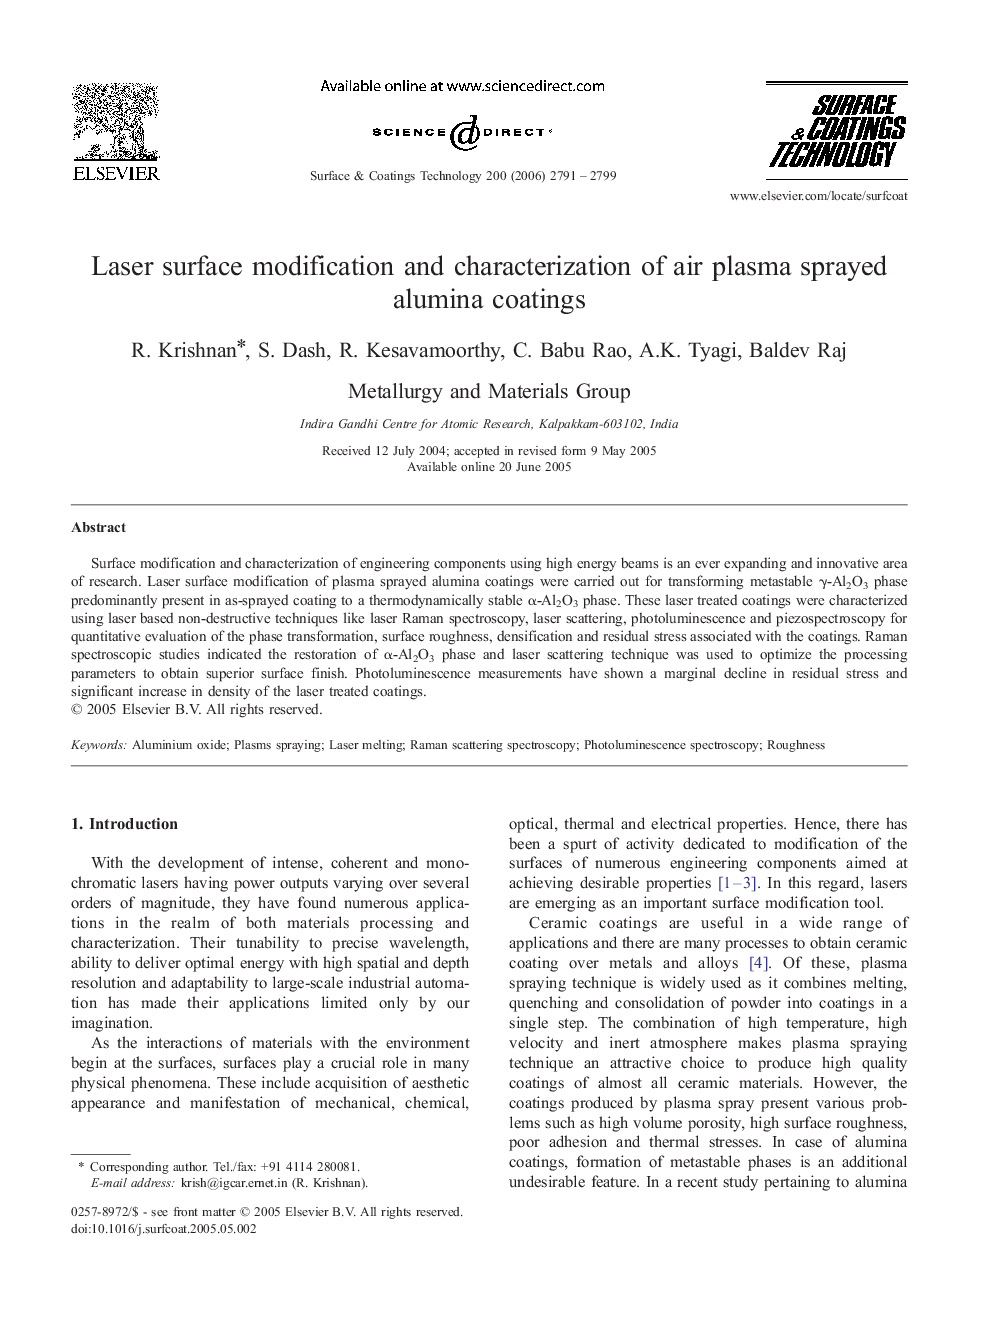 Laser surface modification and characterization of air plasma sprayed alumina coatings